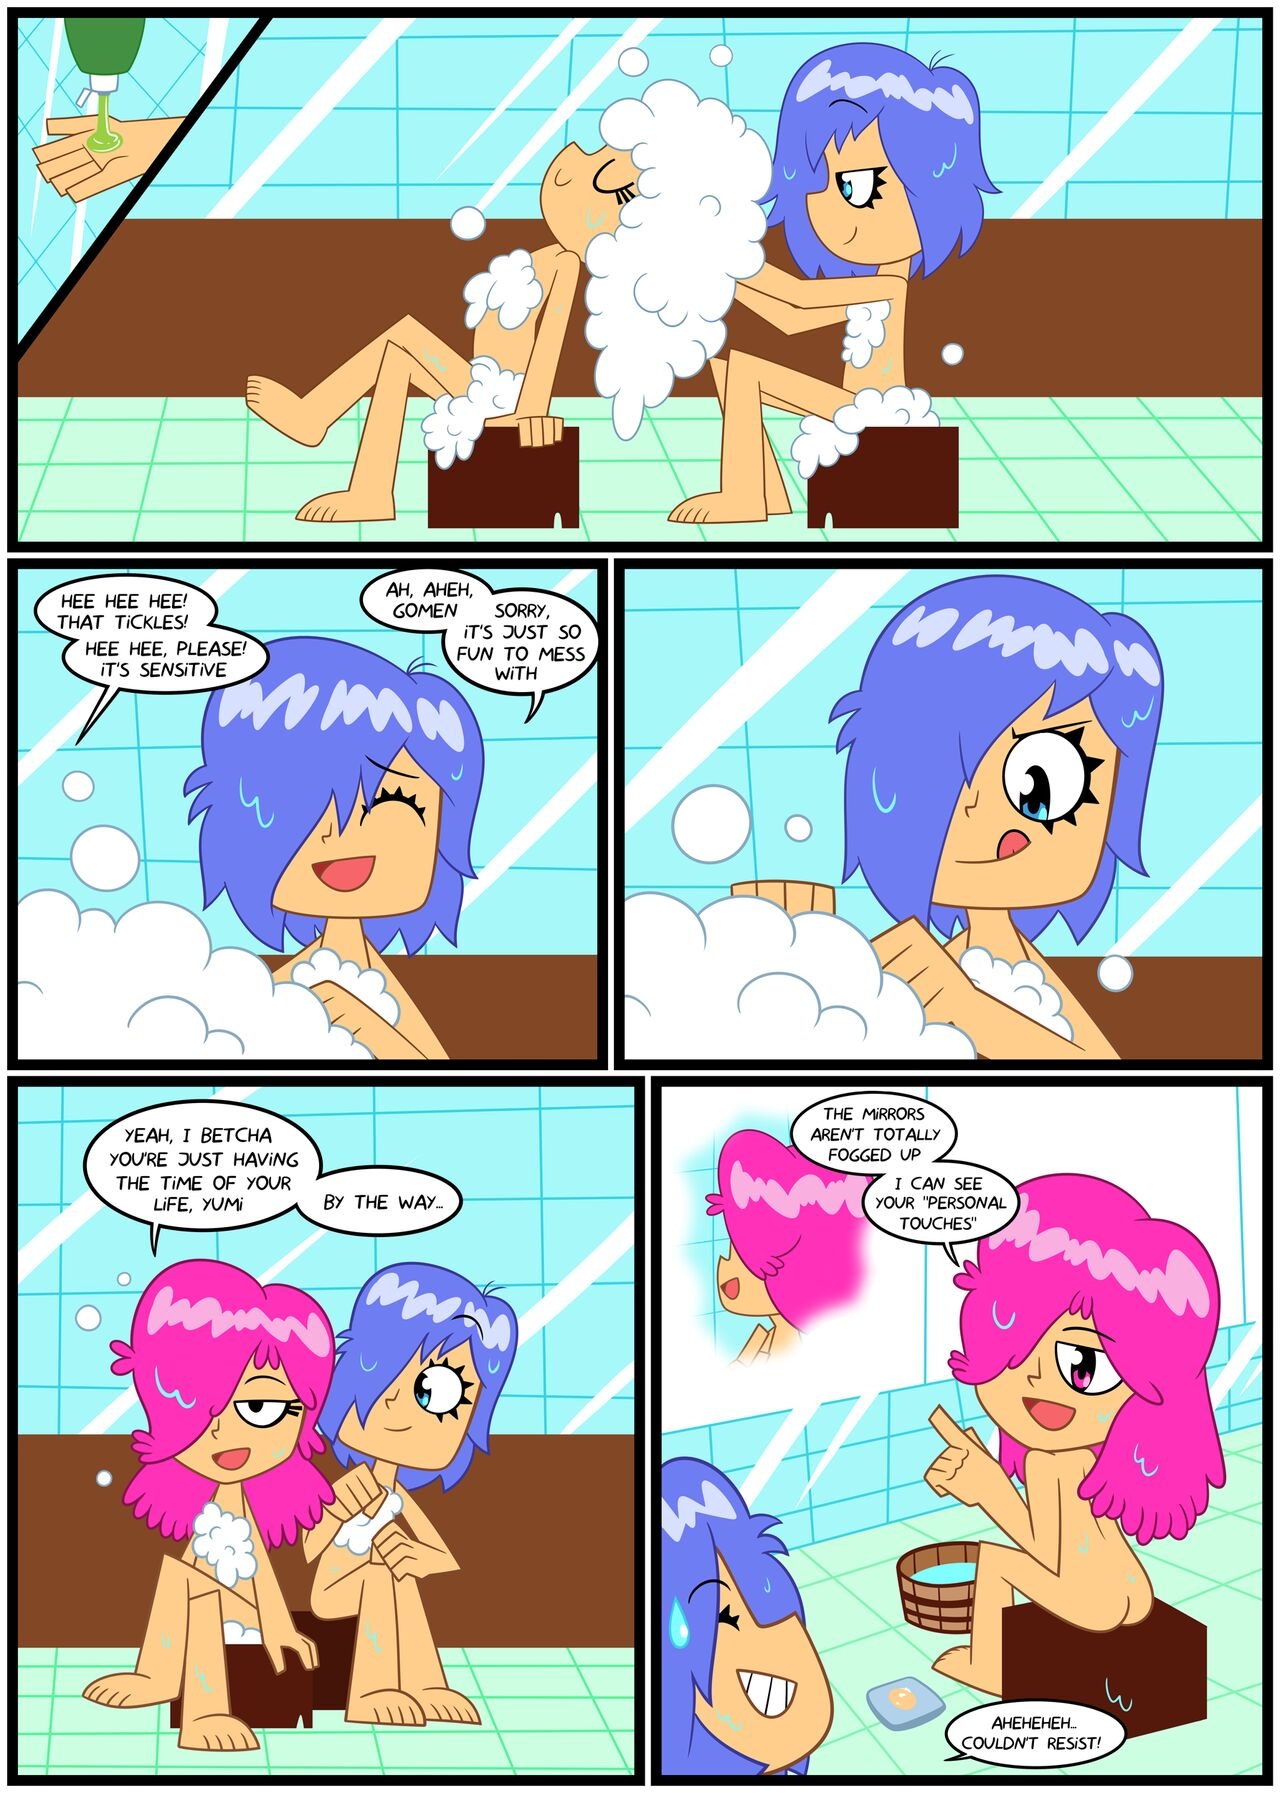 [Xierra099] Towel Trouble (Puffy AmiYumi) (Ongoing) 6